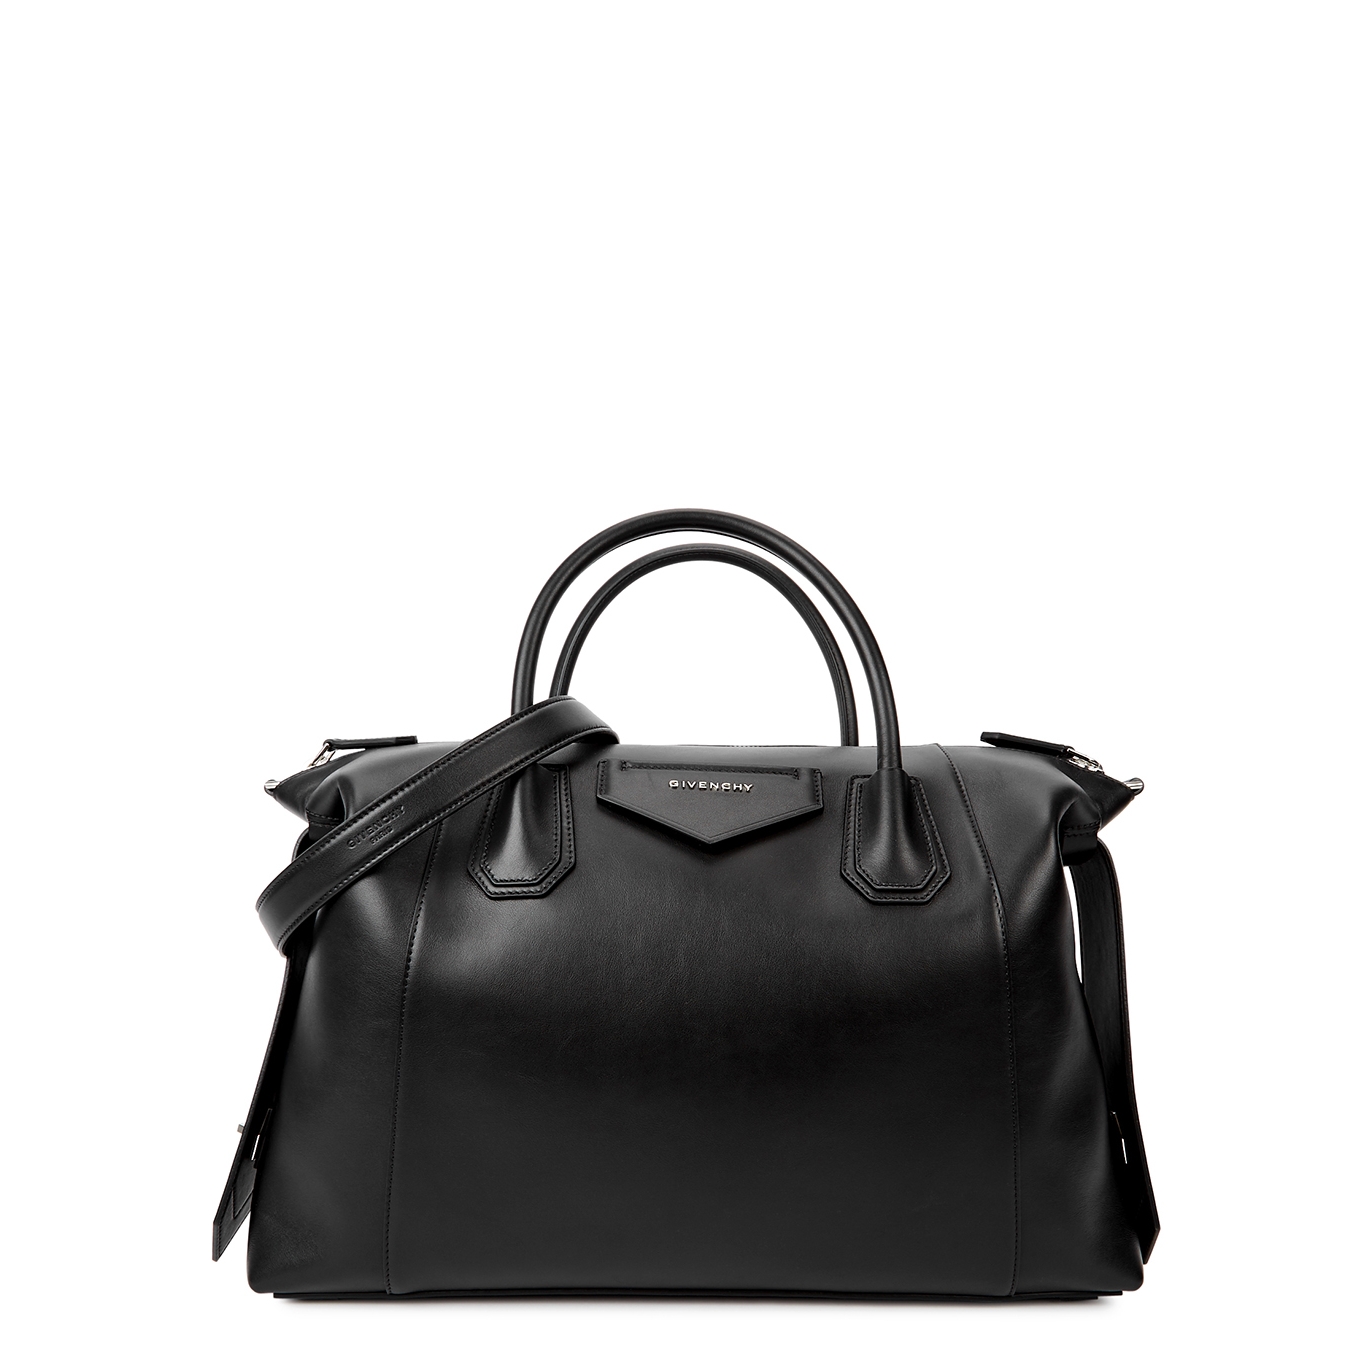 Givenchy Antigona Soft Medium Black Leather Tote